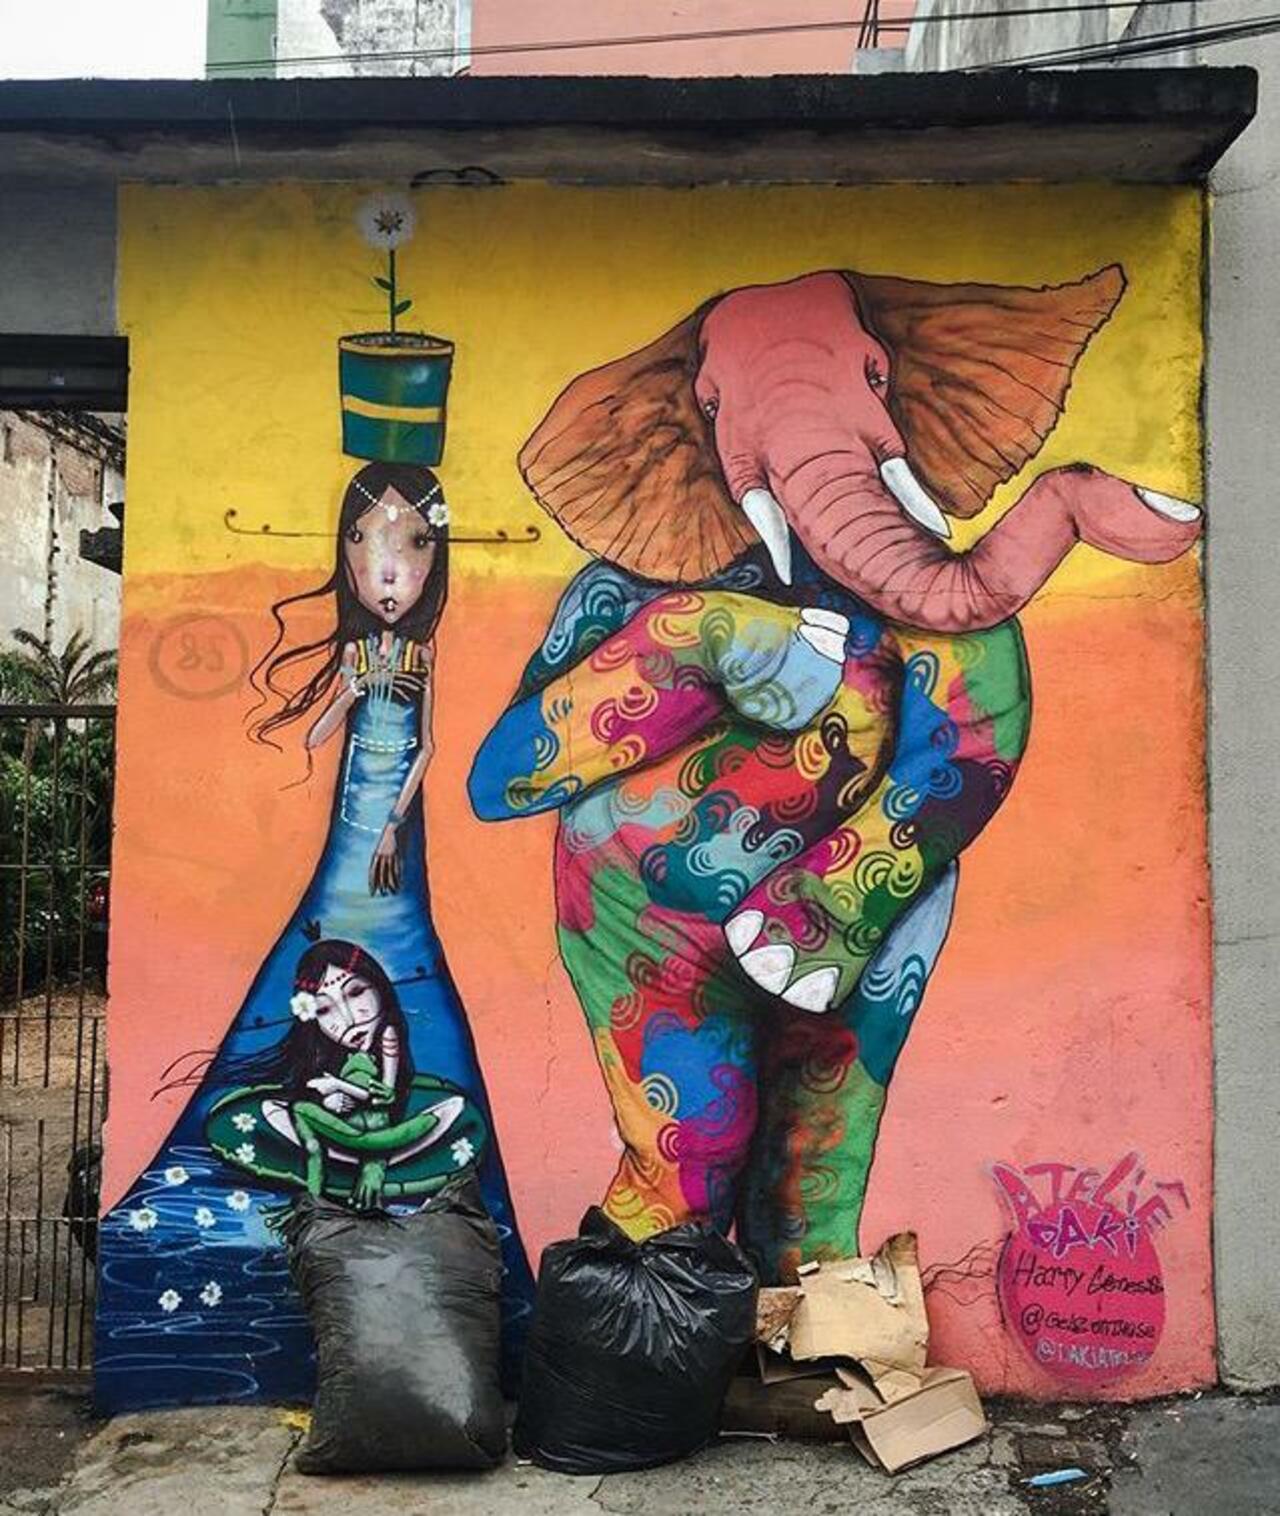 Street Art by Harry Geneis & Gelson in São Paulo 

#art #mural #graffiti #streetart http://t.co/eZ6LOYIm1V